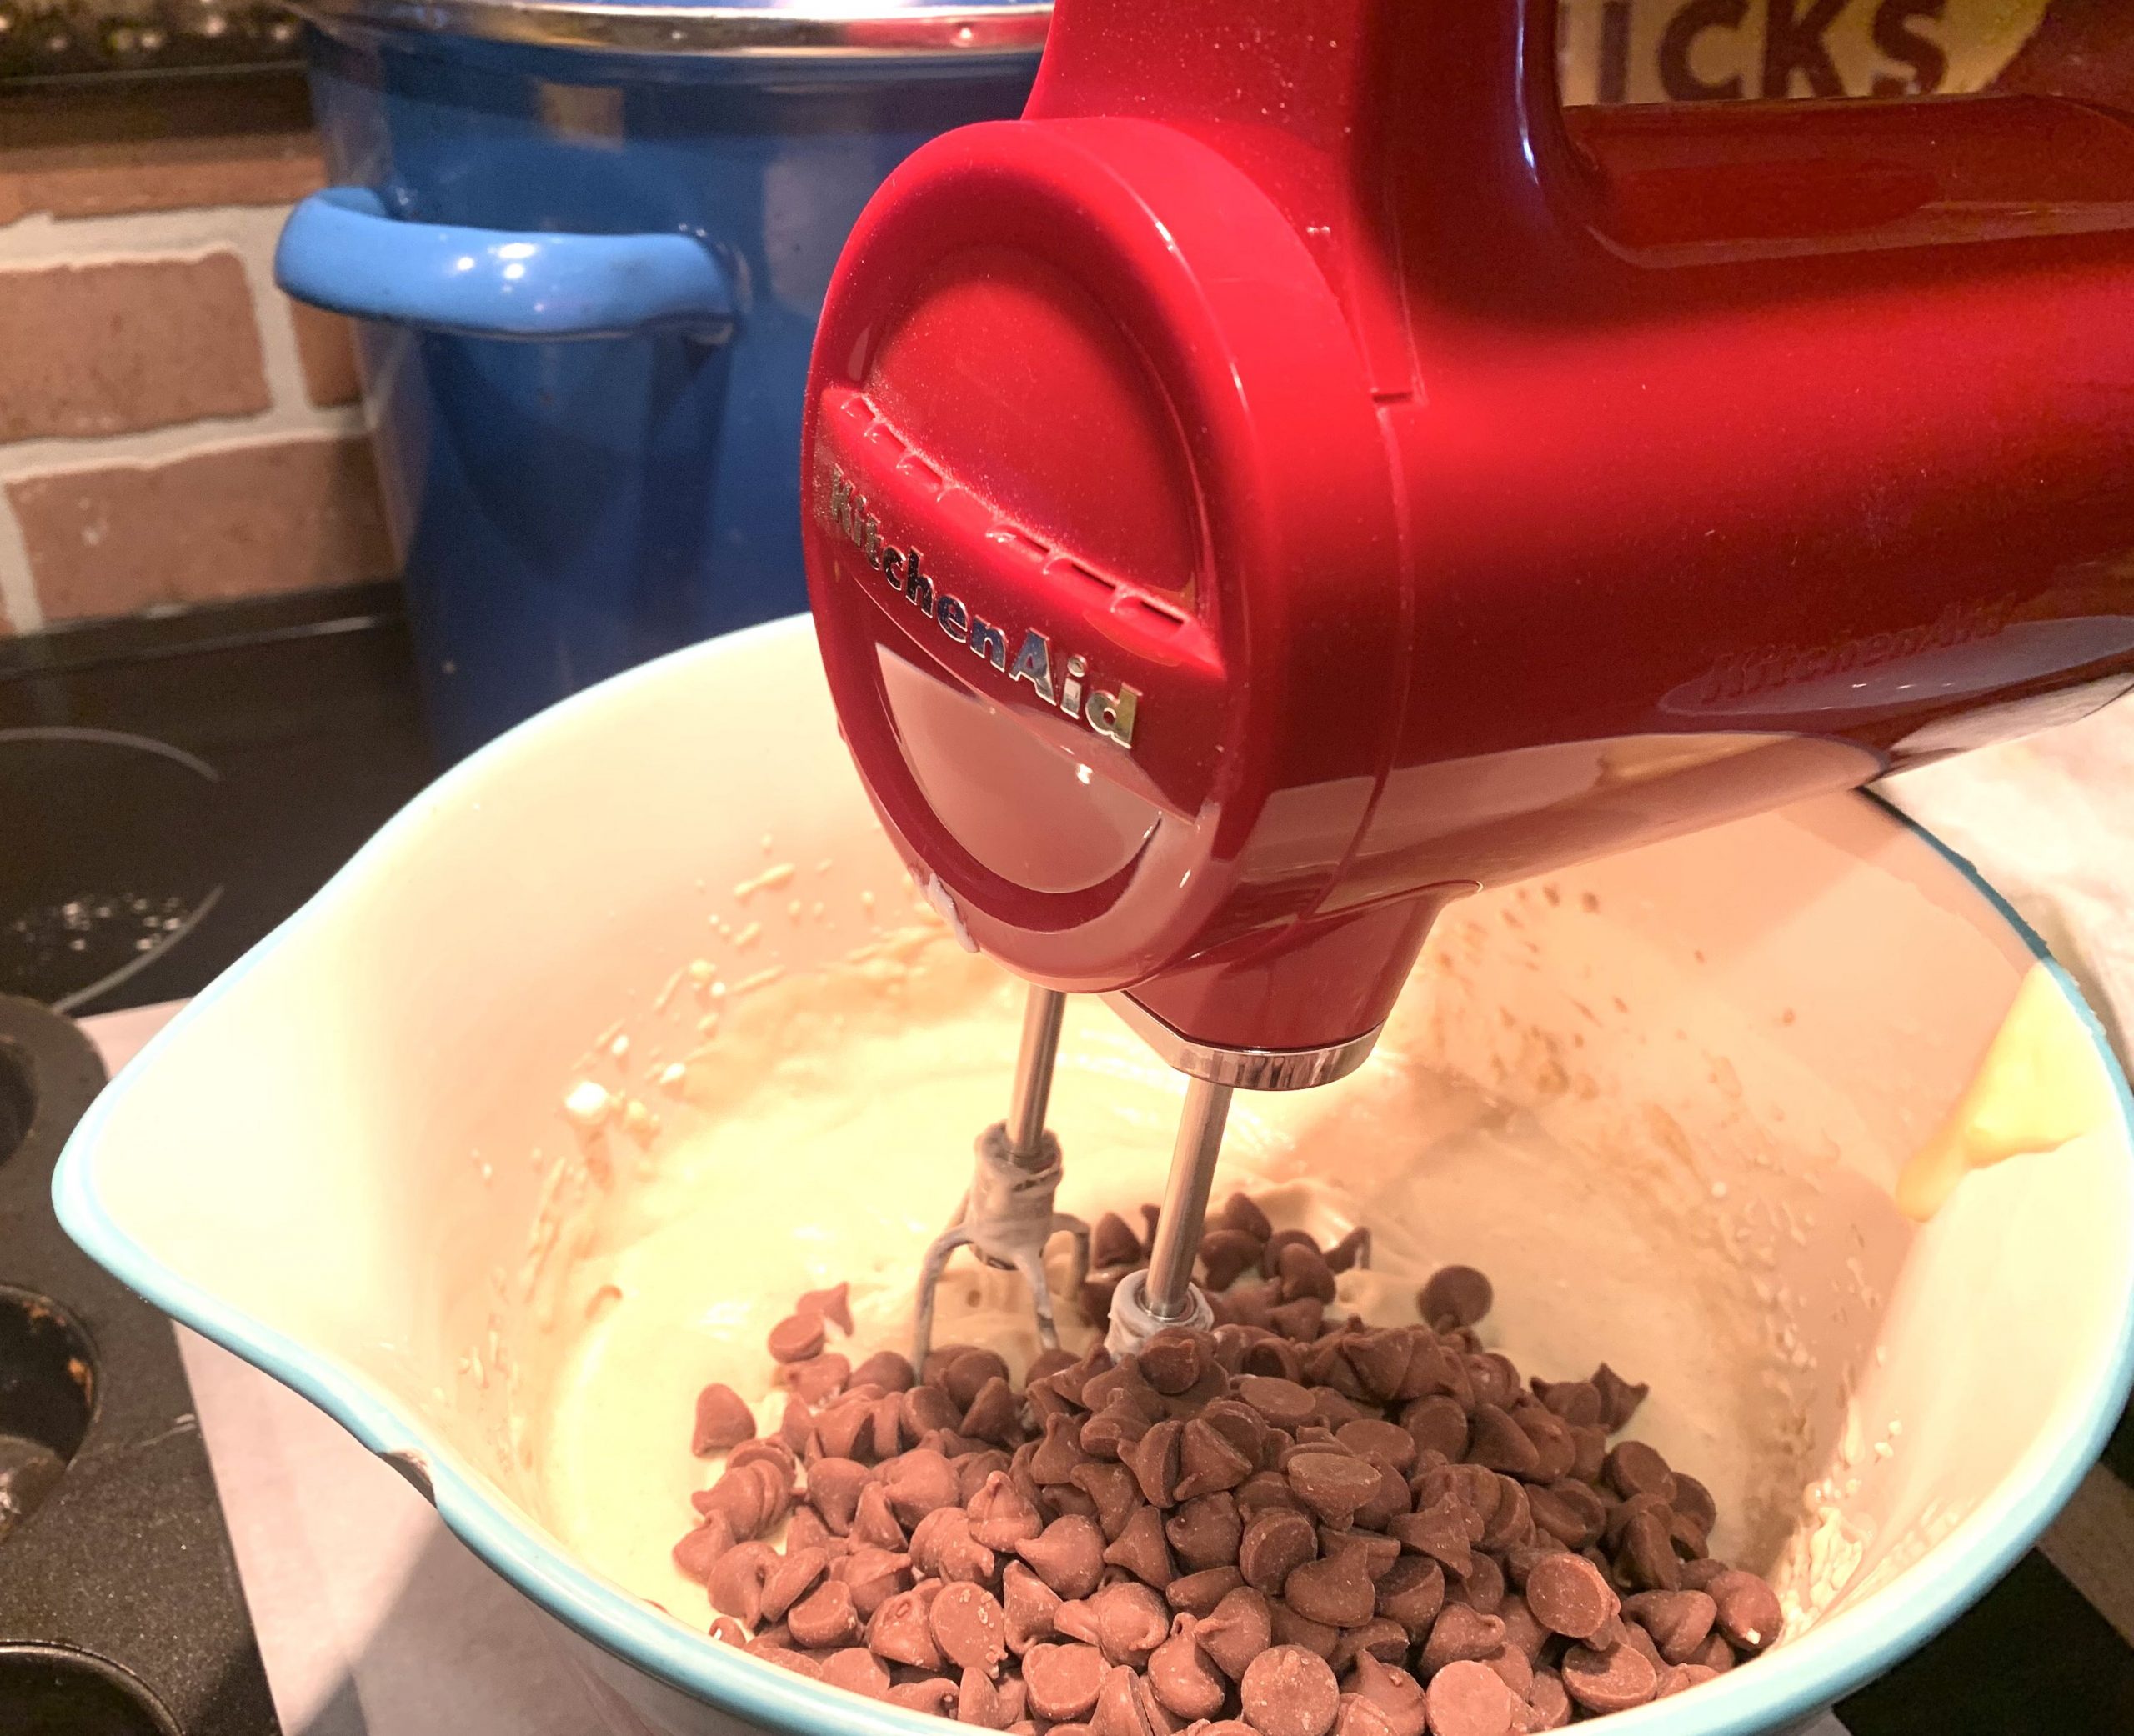 https://blog.bestbuy.ca/wp-content/uploads/2020/08/KitchenAid-Hand-Mixer-cordless-muffins-scaled.jpg